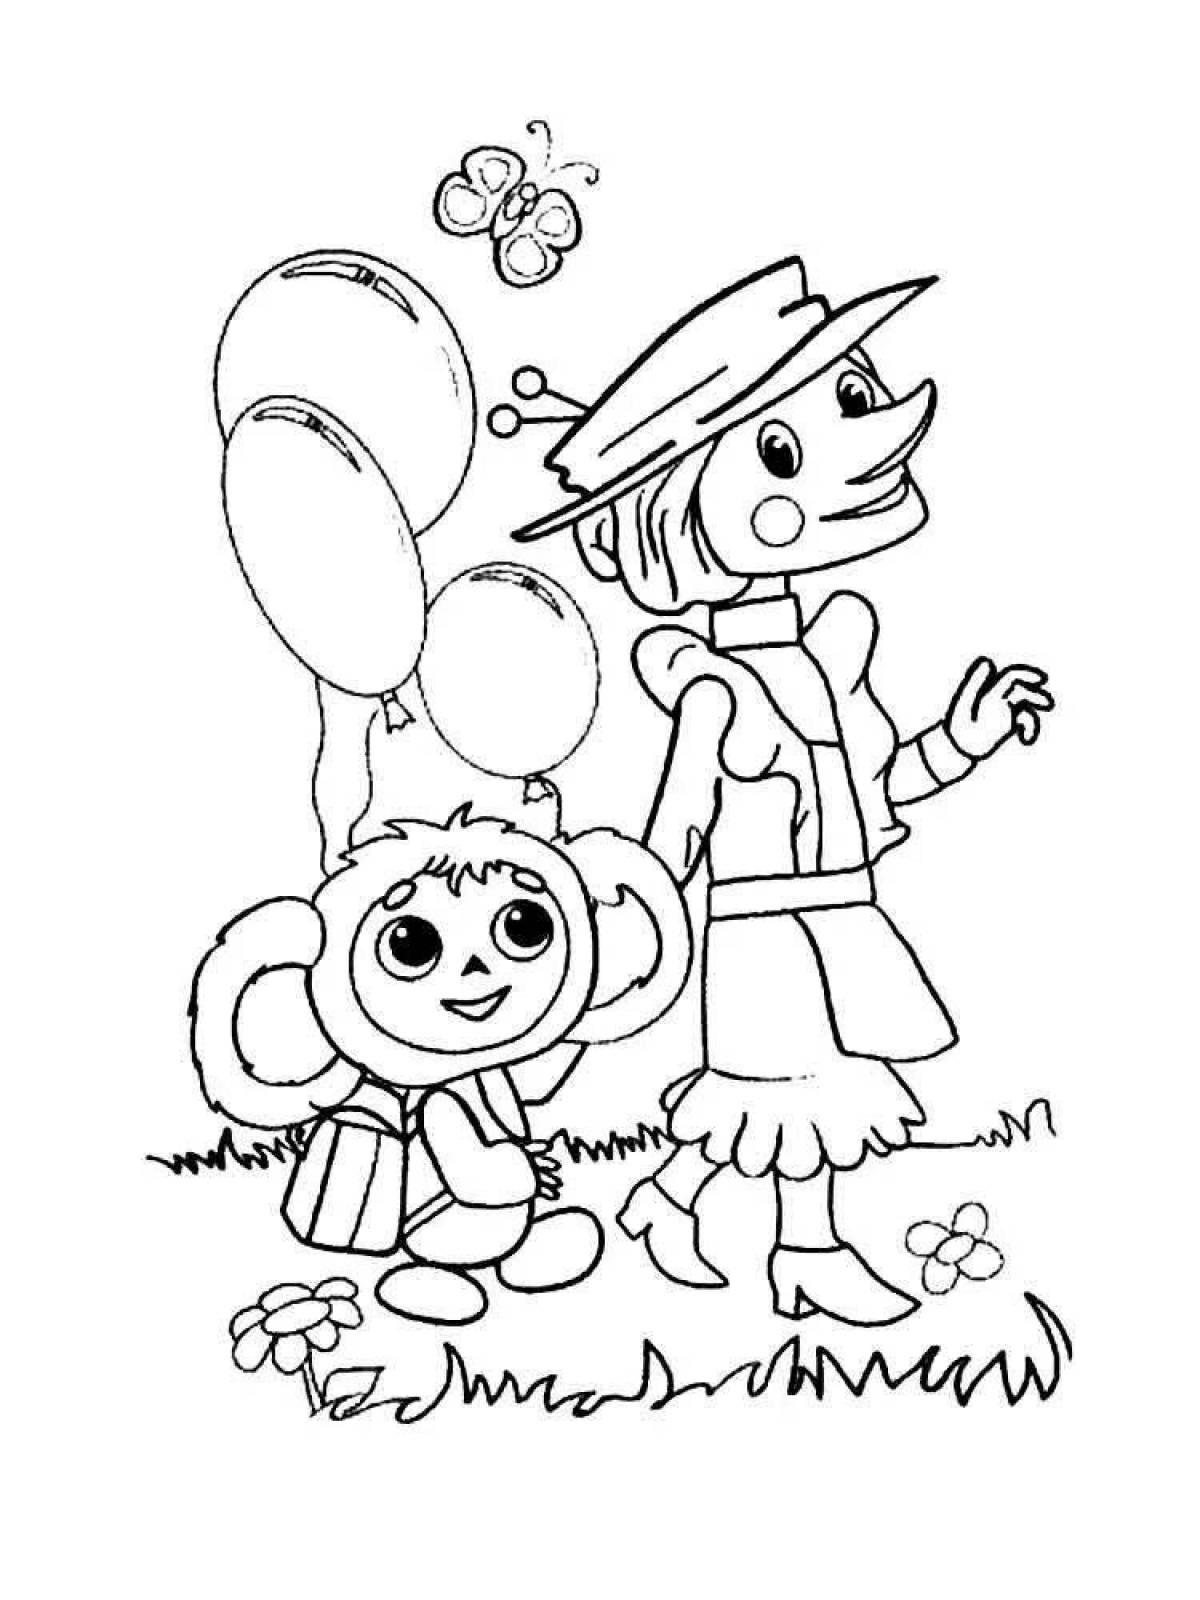 Inviting drawing of cheburashka